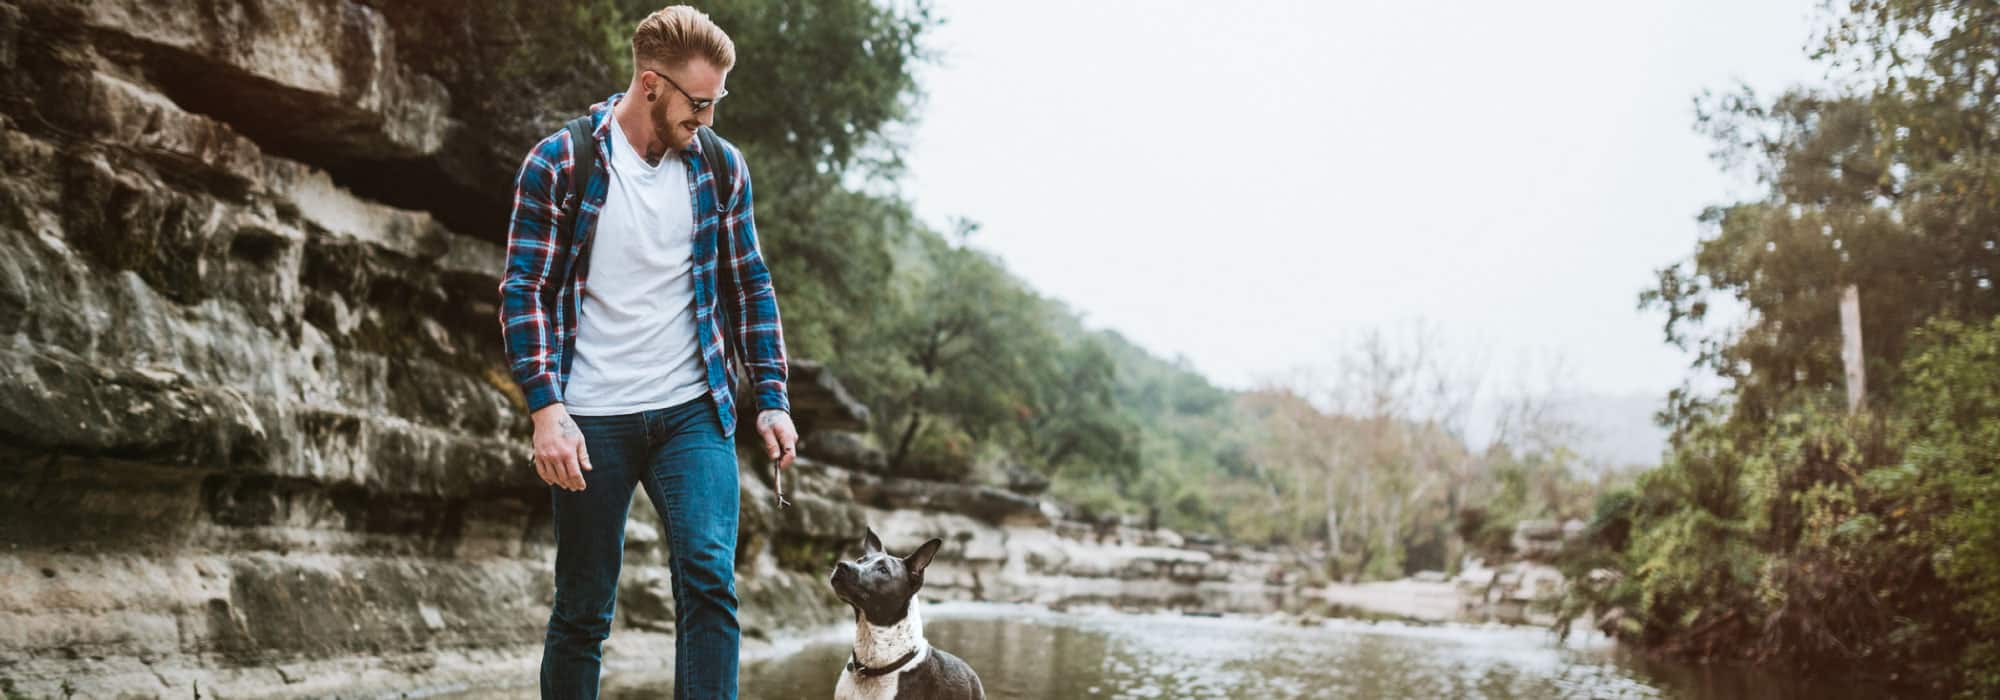 A man walks through a creek with a dog.